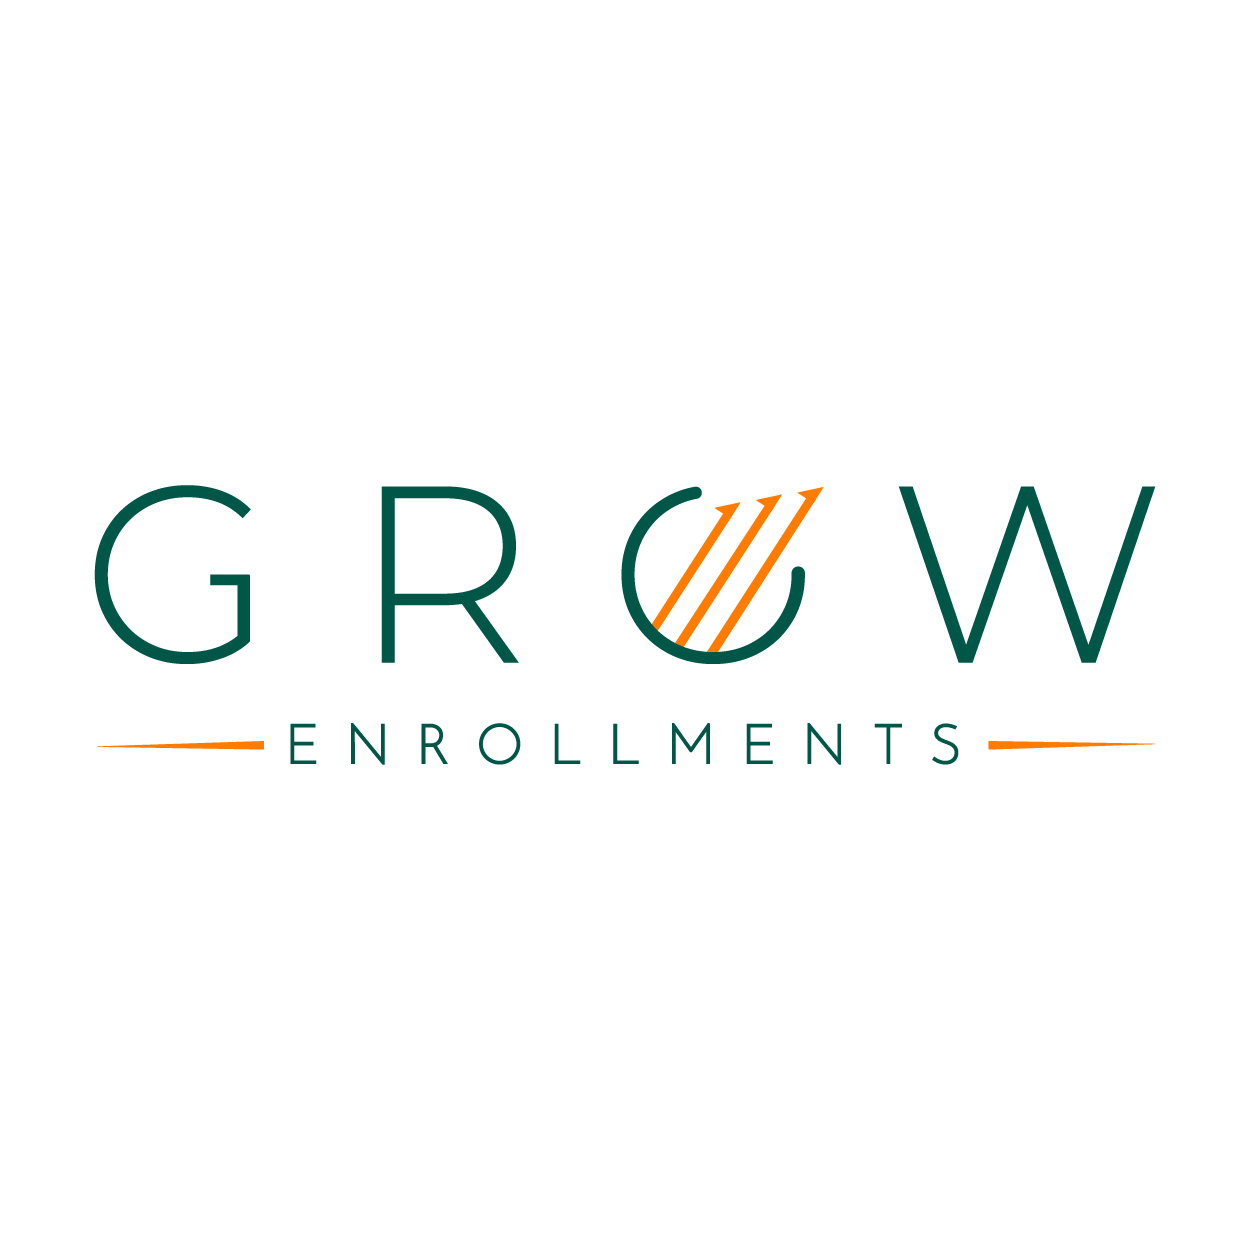 Grow Enrollments